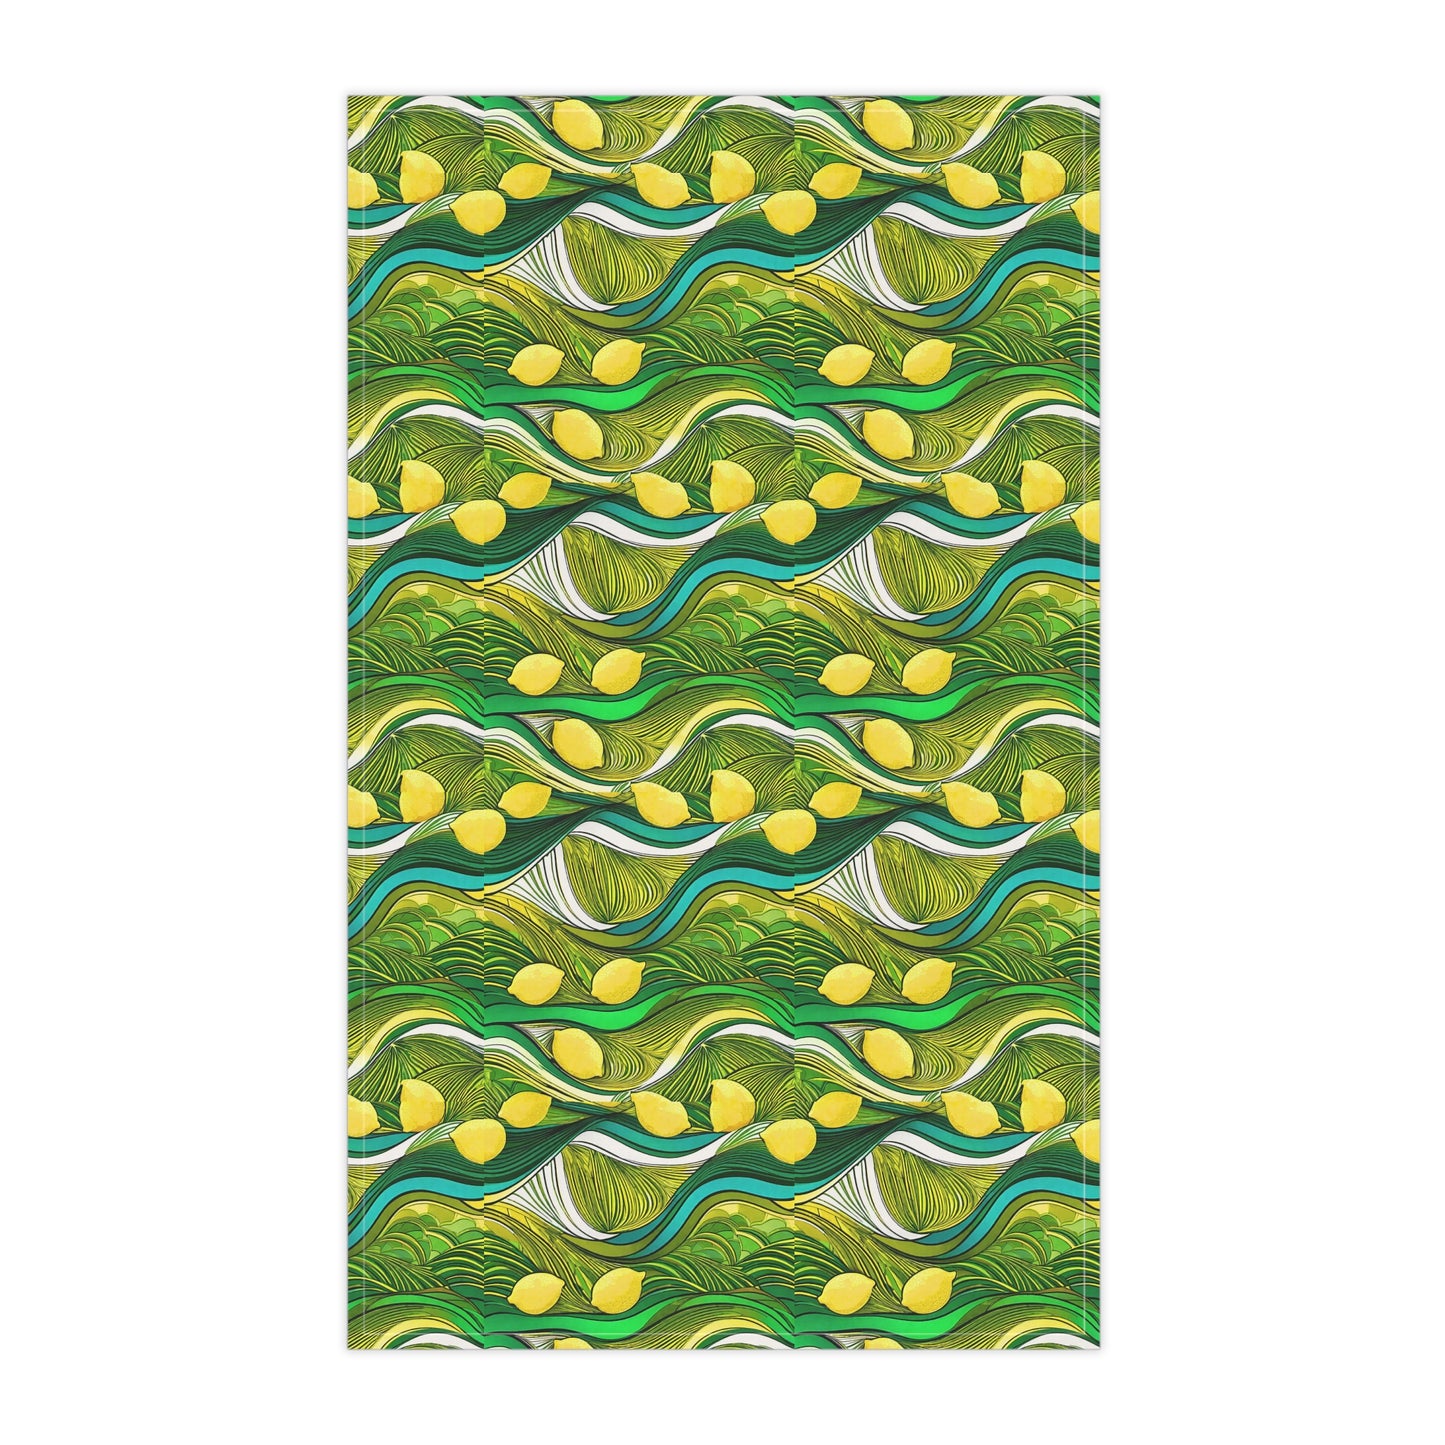 Modern Lemon Waves Entertaining Home Decorative Kitchen Tea Towel/Bar Towel